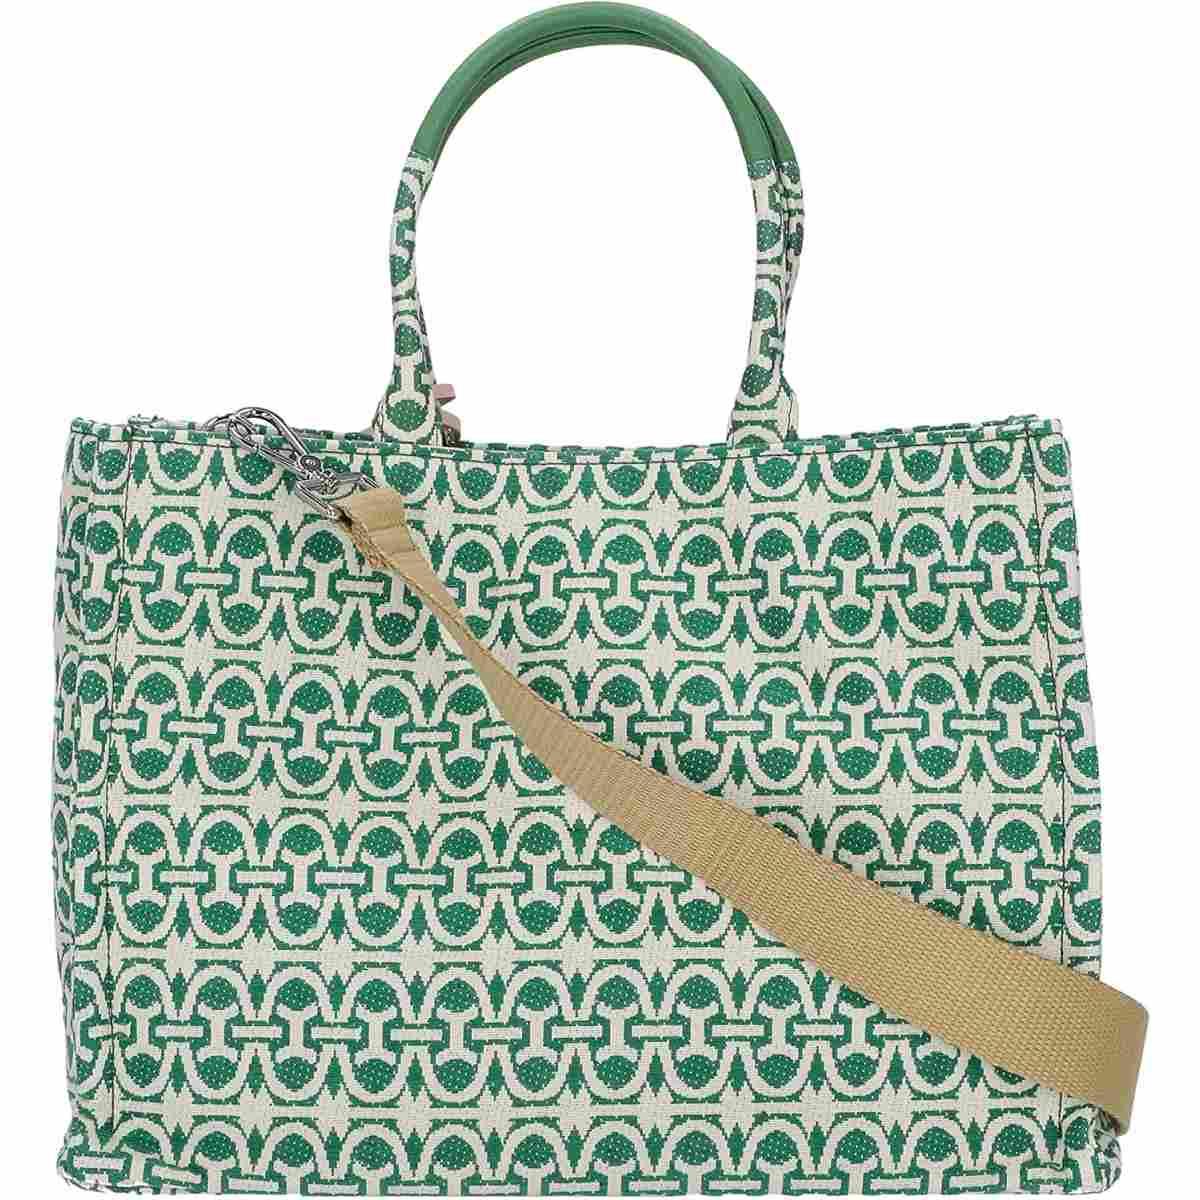 Never without bag monogra handbag jacquard fabri